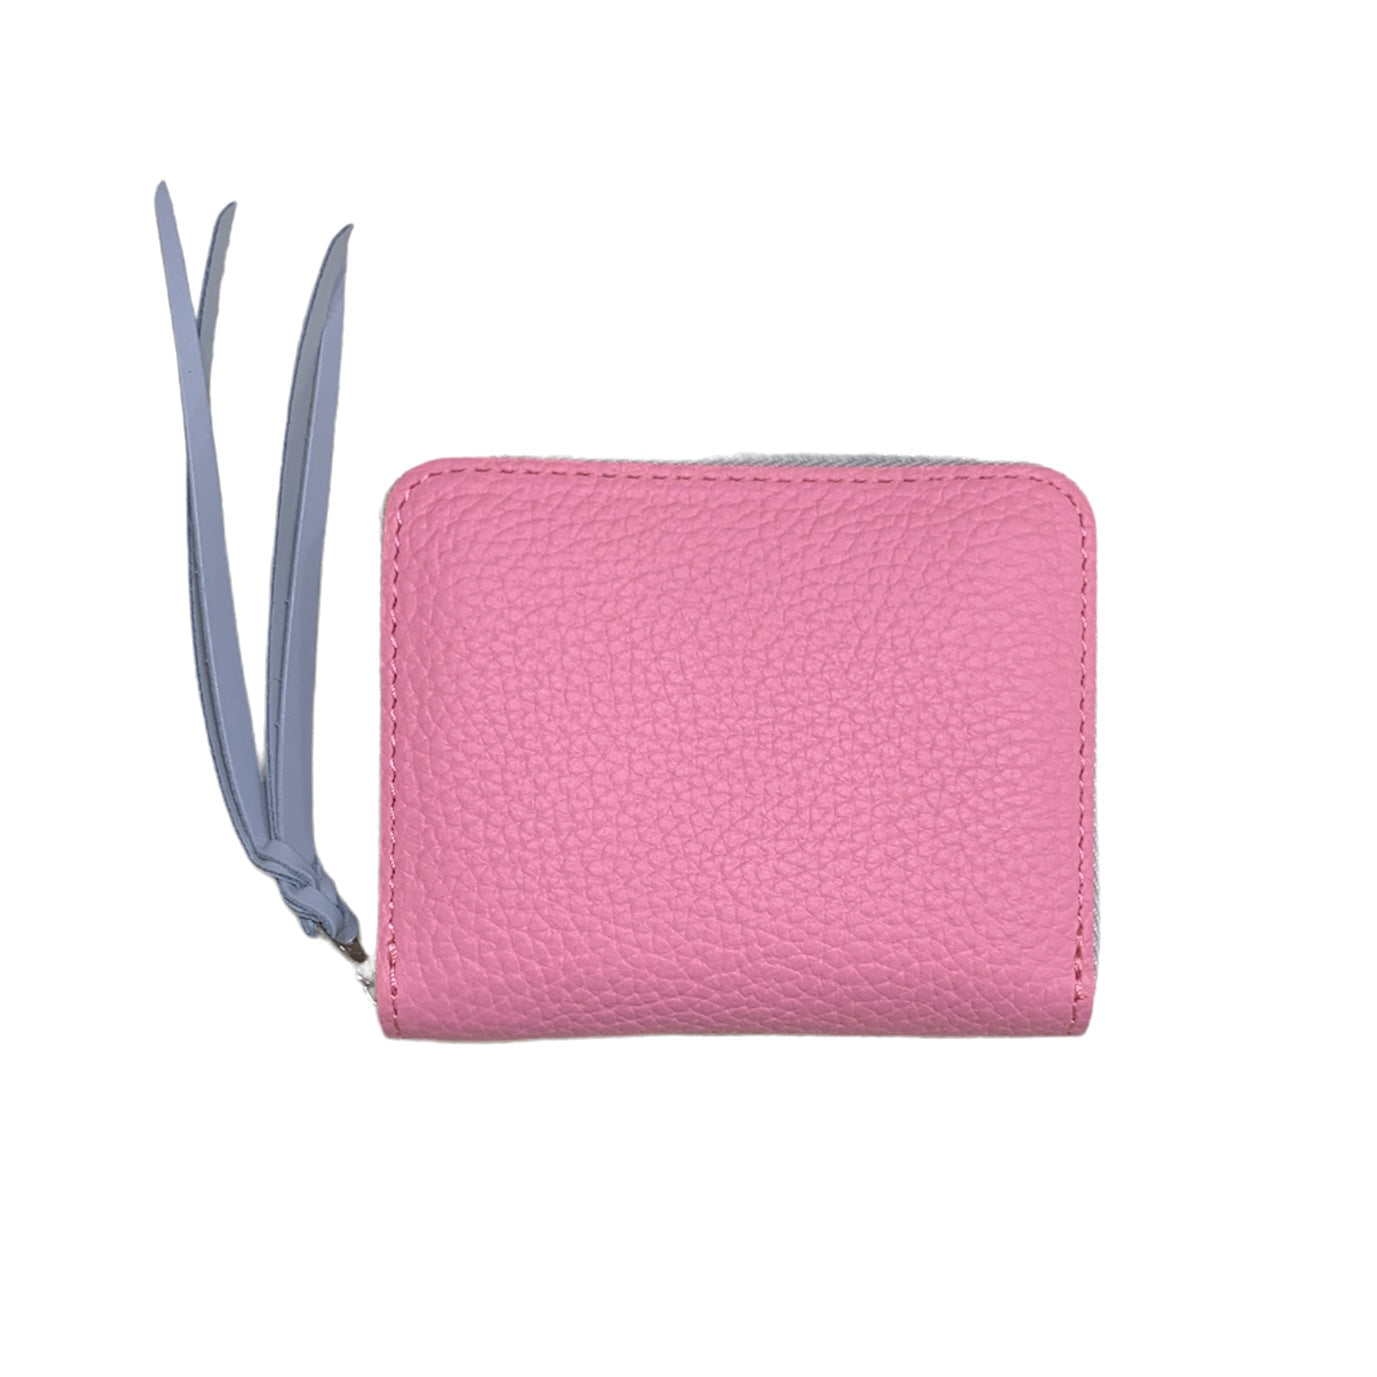 Anak compact round zip color scheme wallet